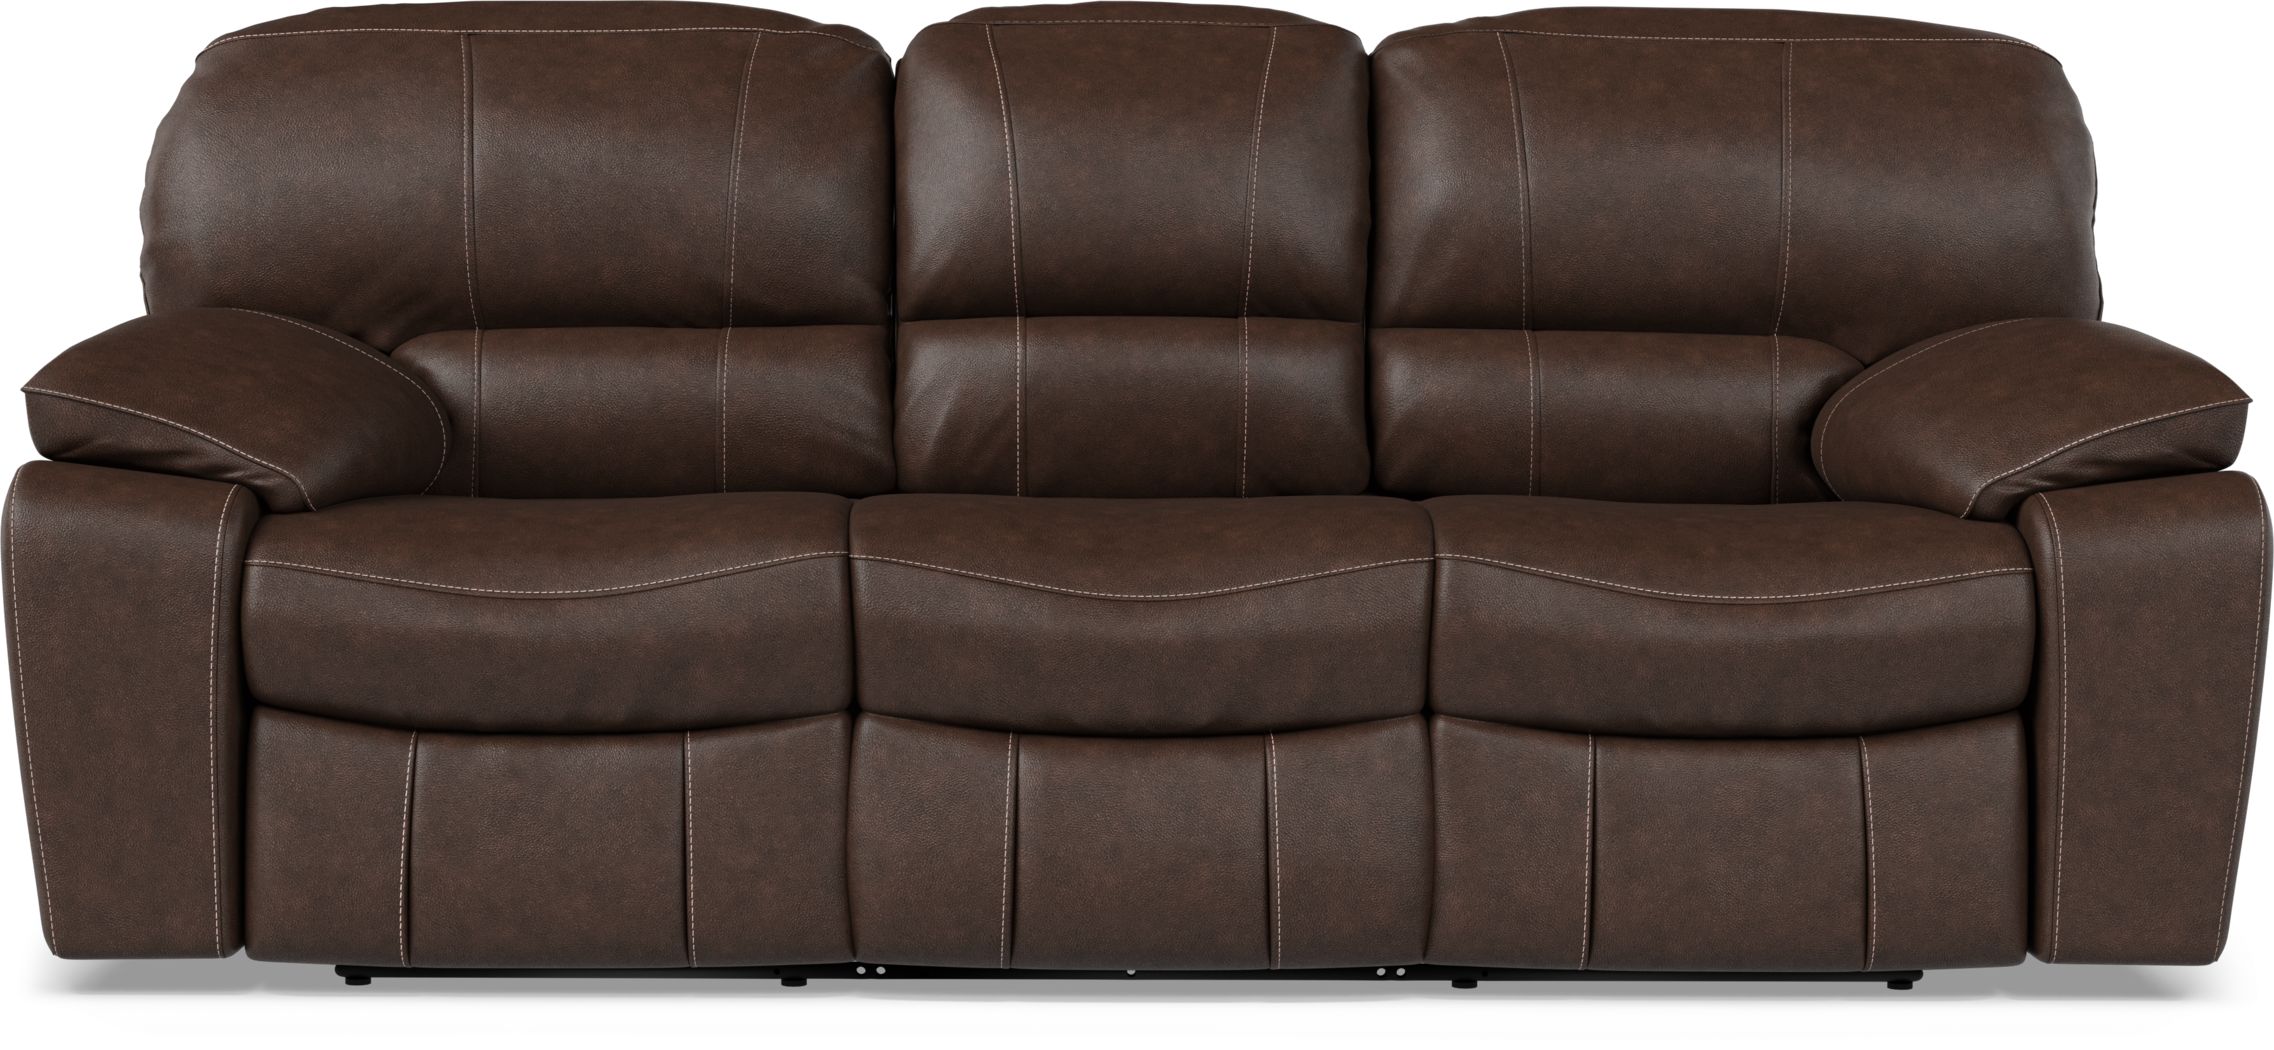 cindy crawford home leather sofa